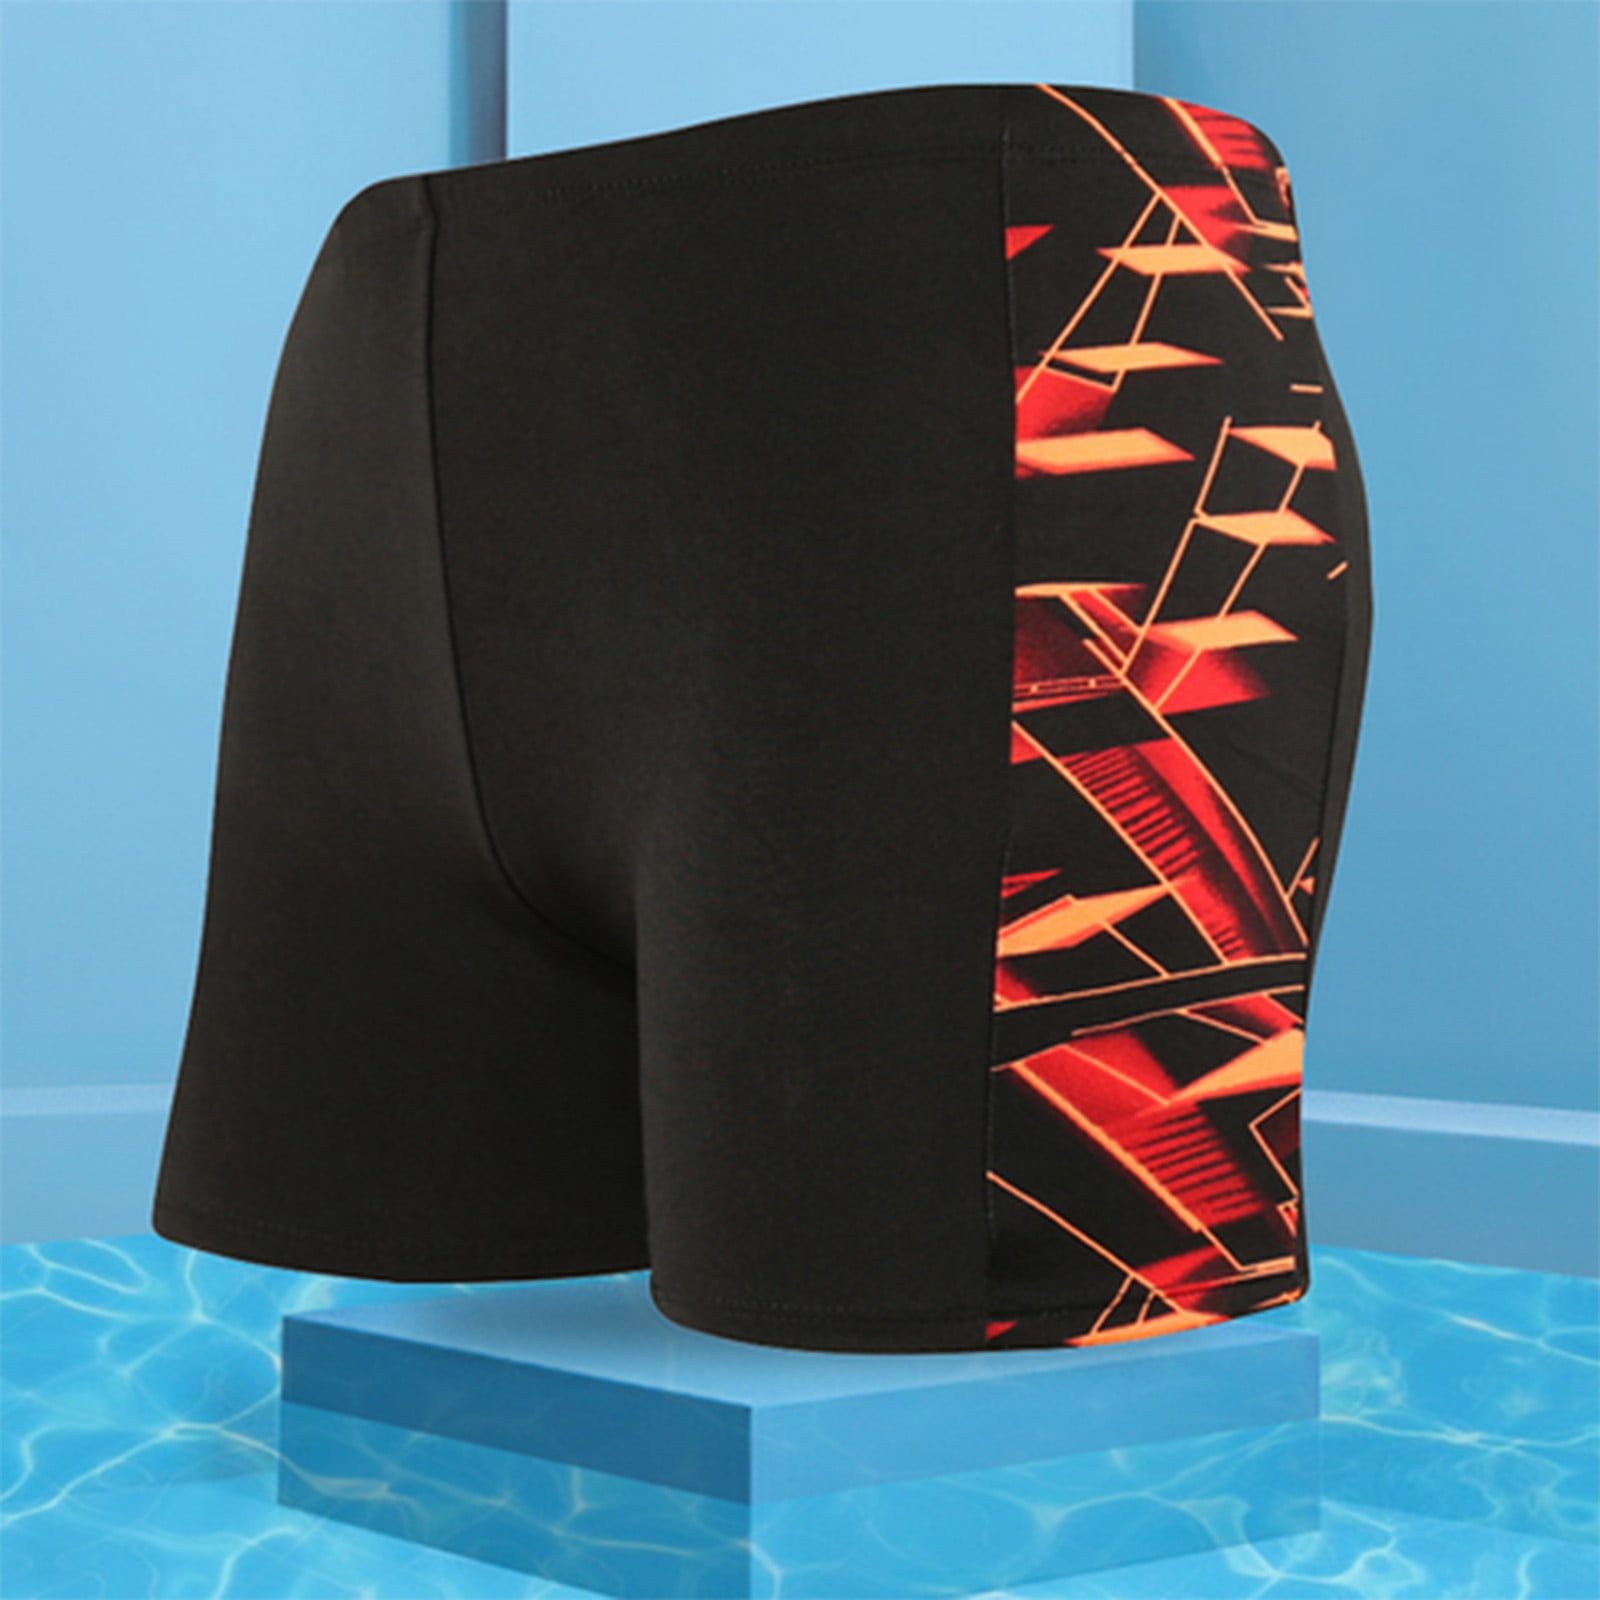 Adult Printed Boxer Swimwear Spa Swimming Shorts Swim Breathable Trunks